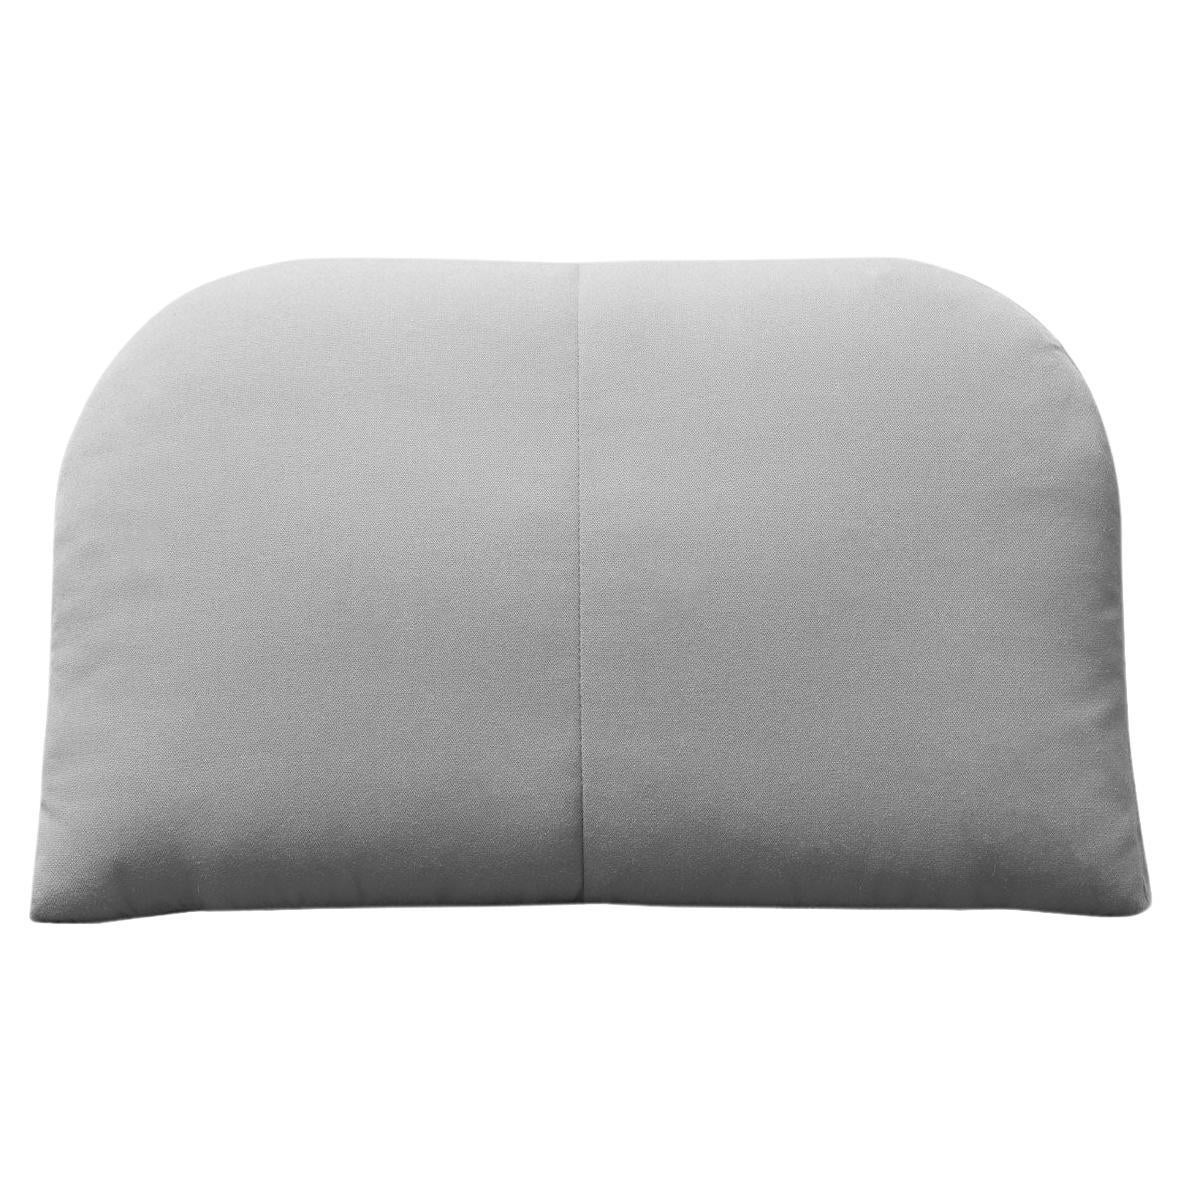 Bend Goods - Arc Throw Pillow in Granite Sunbrella For Sale